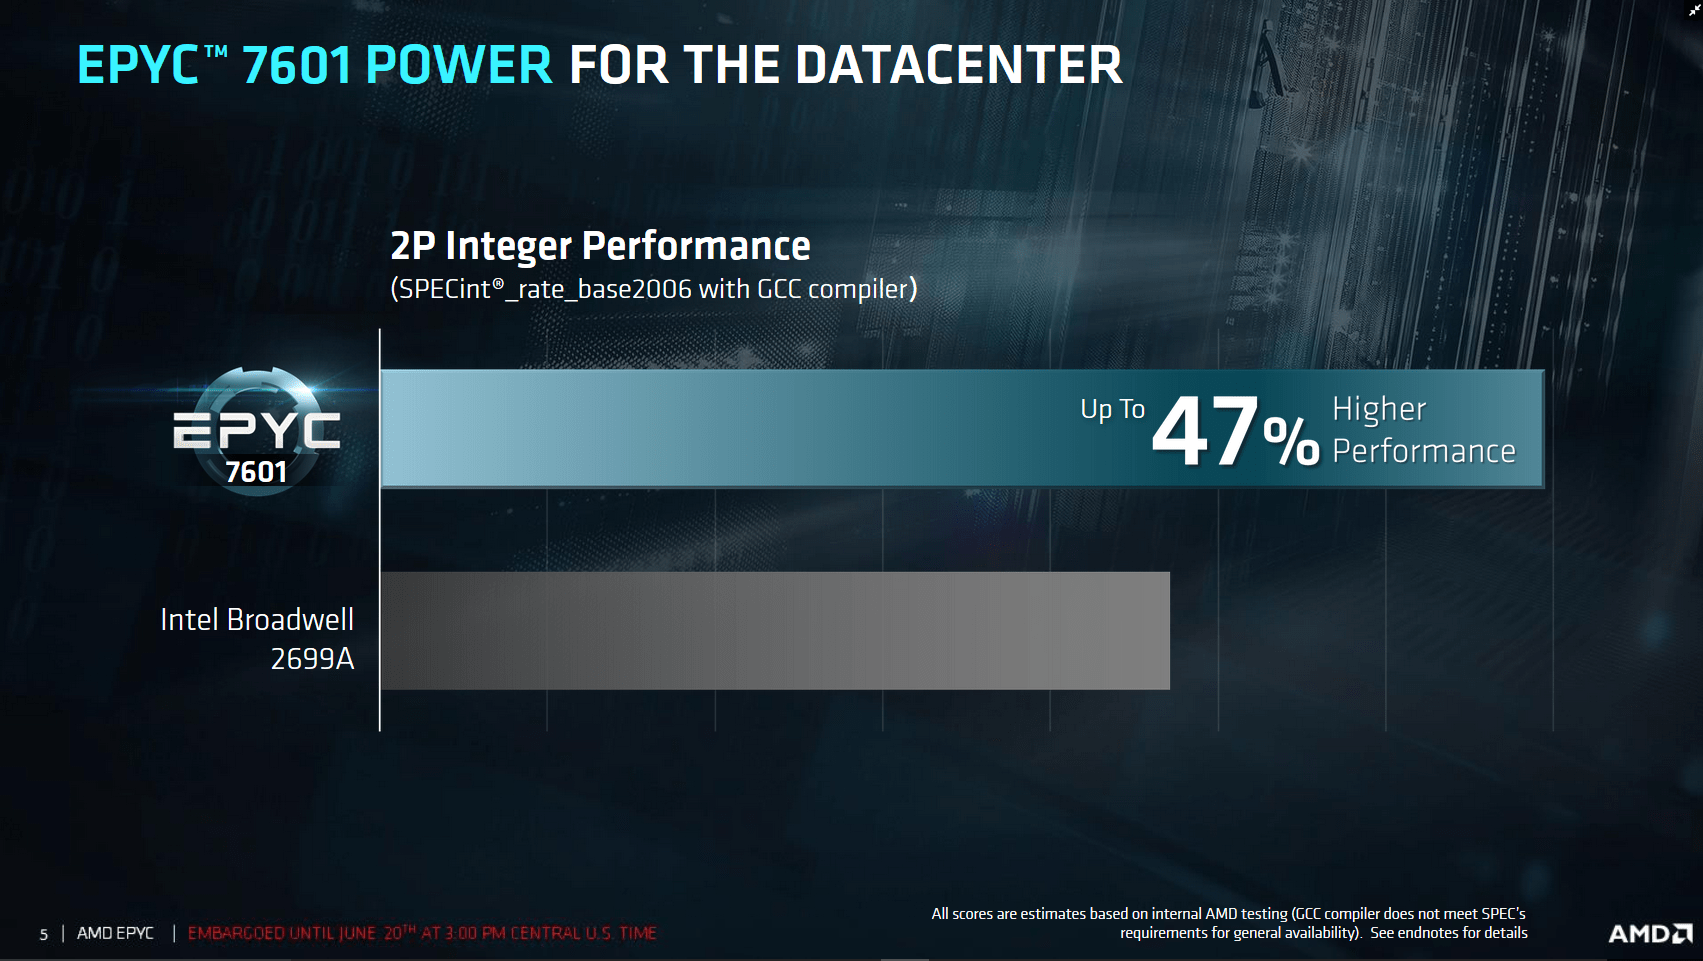 AMD-eigene Benchmarks zu Epyc